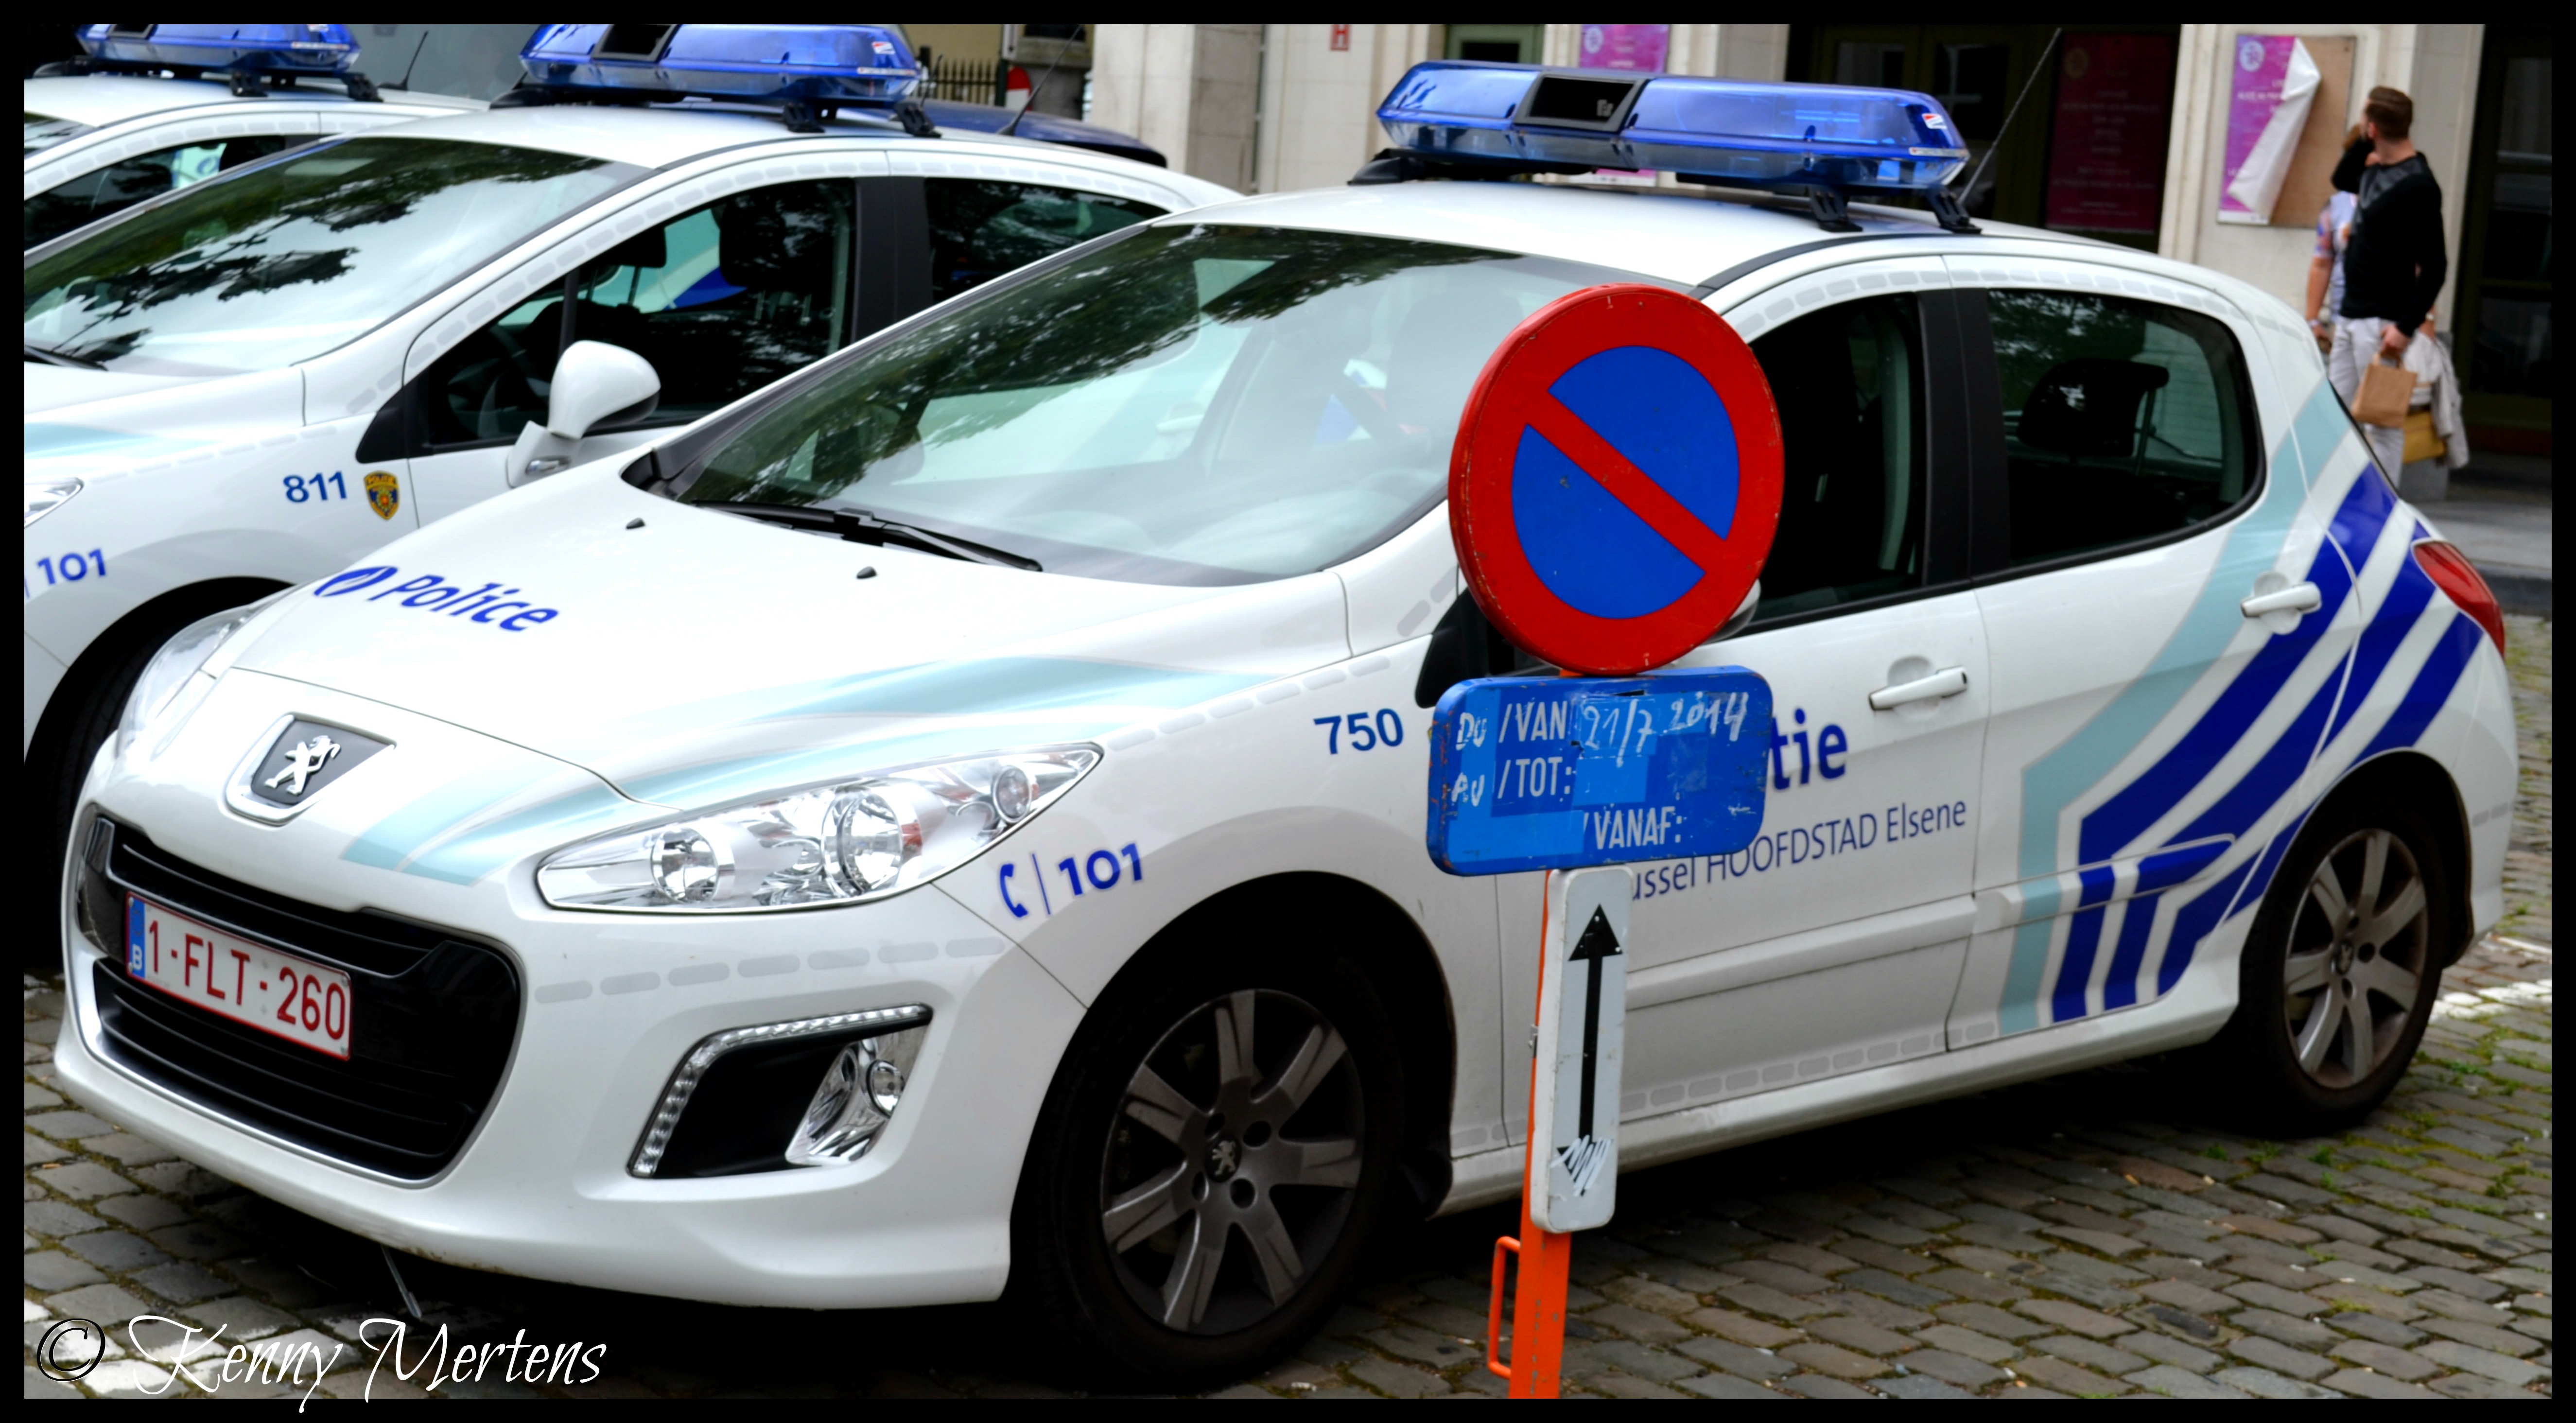 Zone de police Bruxelles Capitale Ixelles (ZP 5339 - PolBru) - Page 3 14830076295_786d104375_o